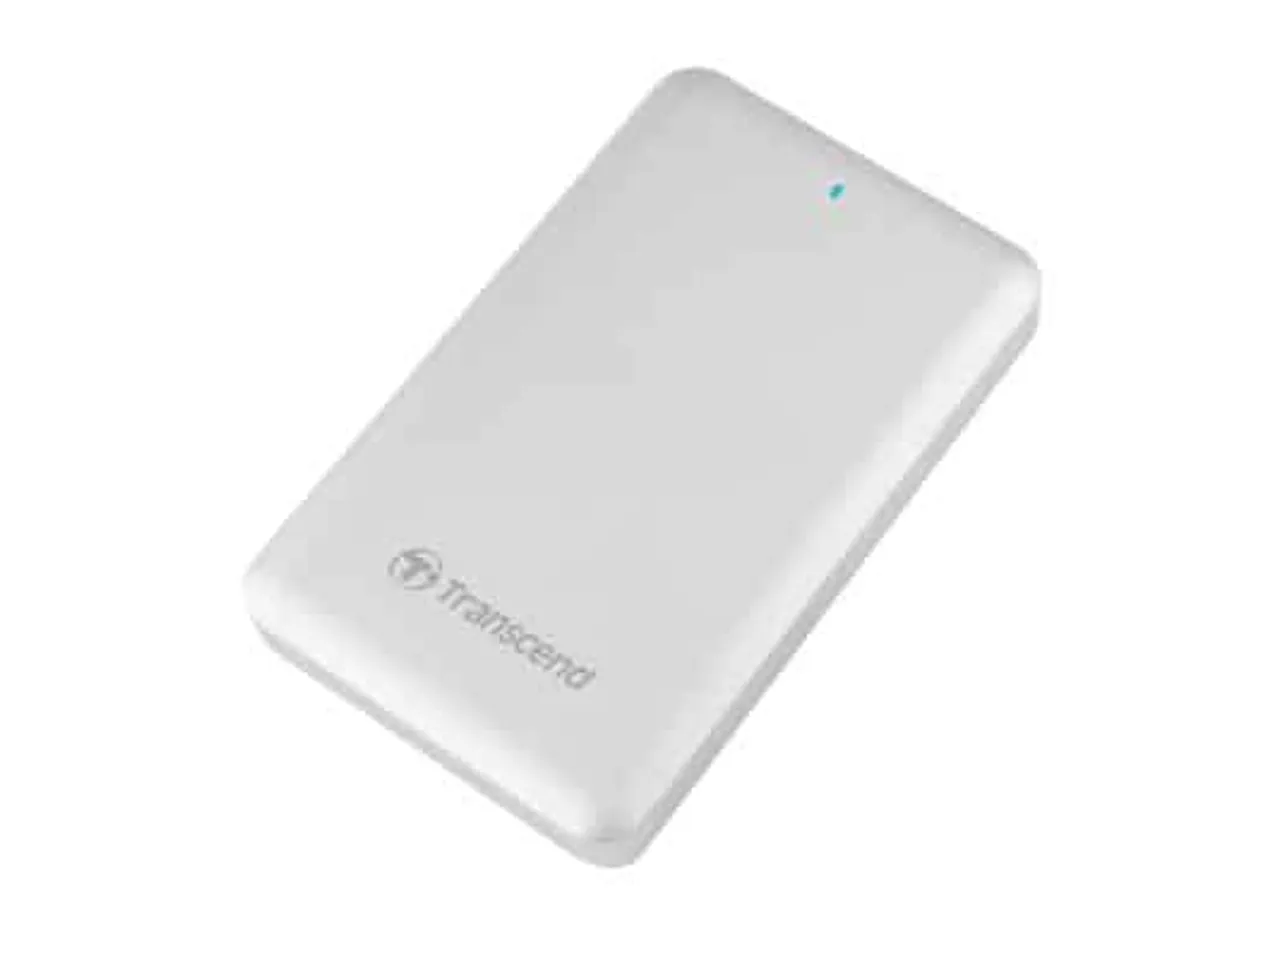 Transcend StoreJet500 256 GB - External Drive Review